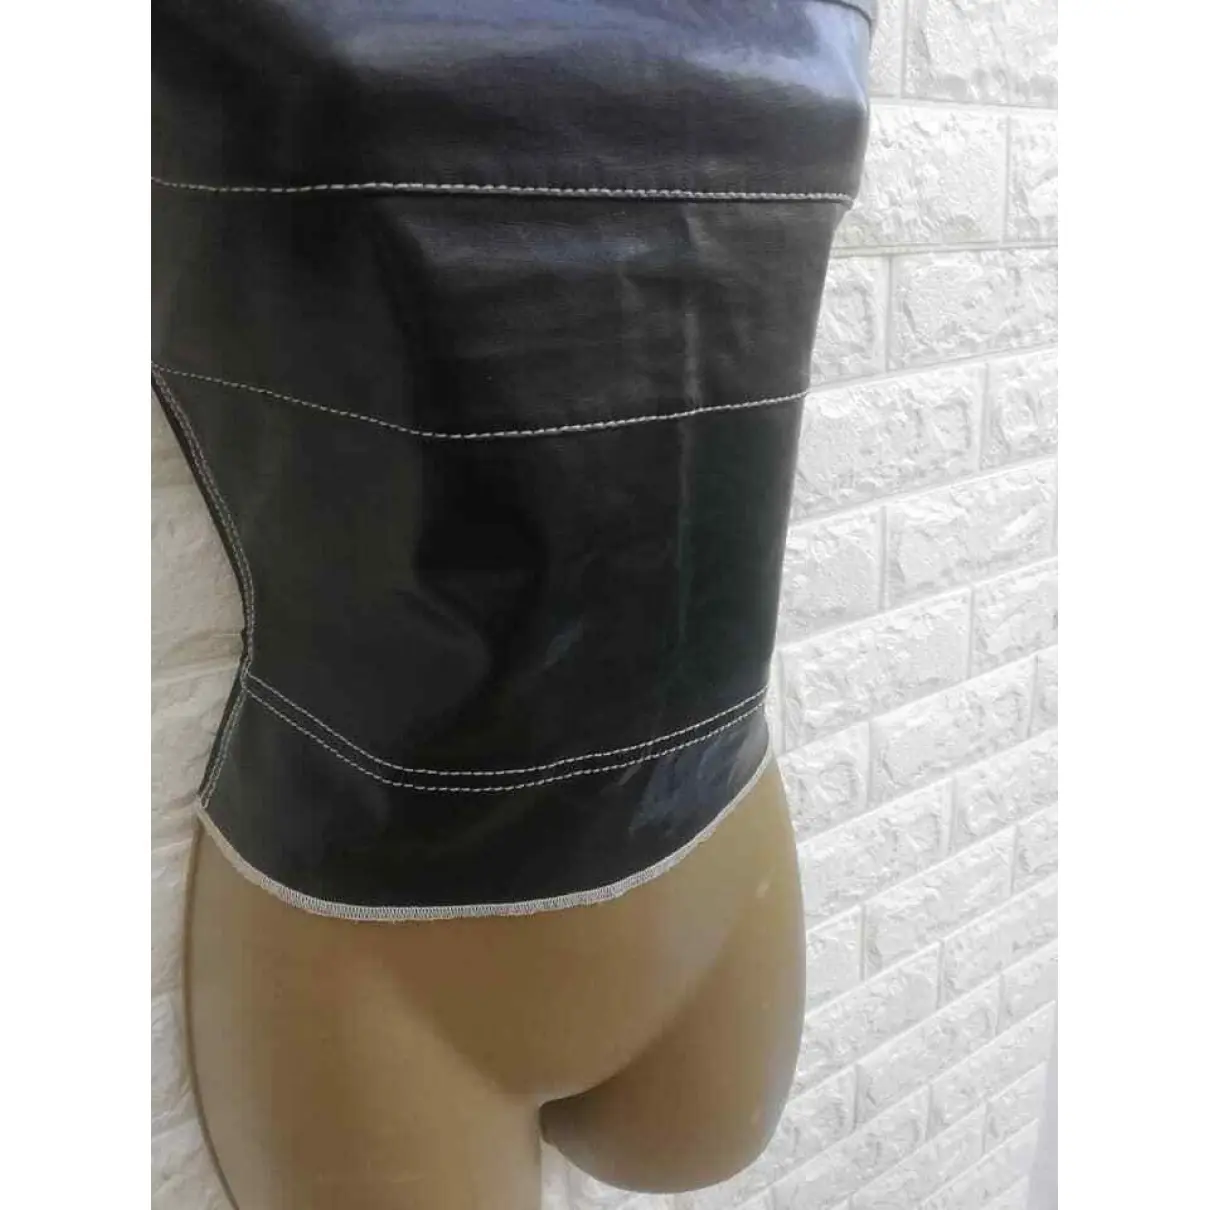 Buy MORGAN Vegan leather vest online - Vintage